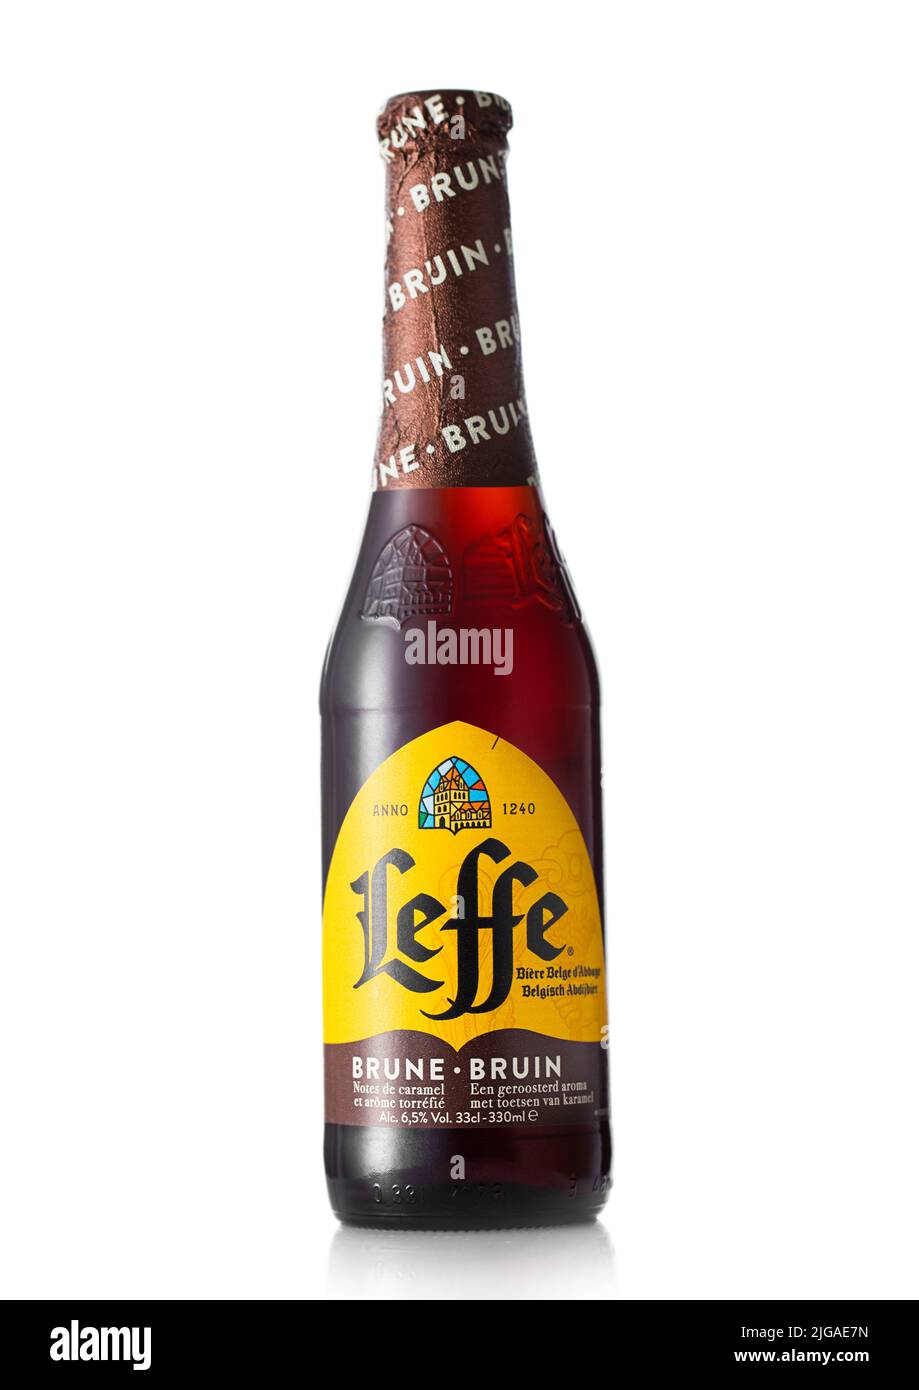 File:Verre à bière Leffe -coupe.jpg - Wikimedia Commons